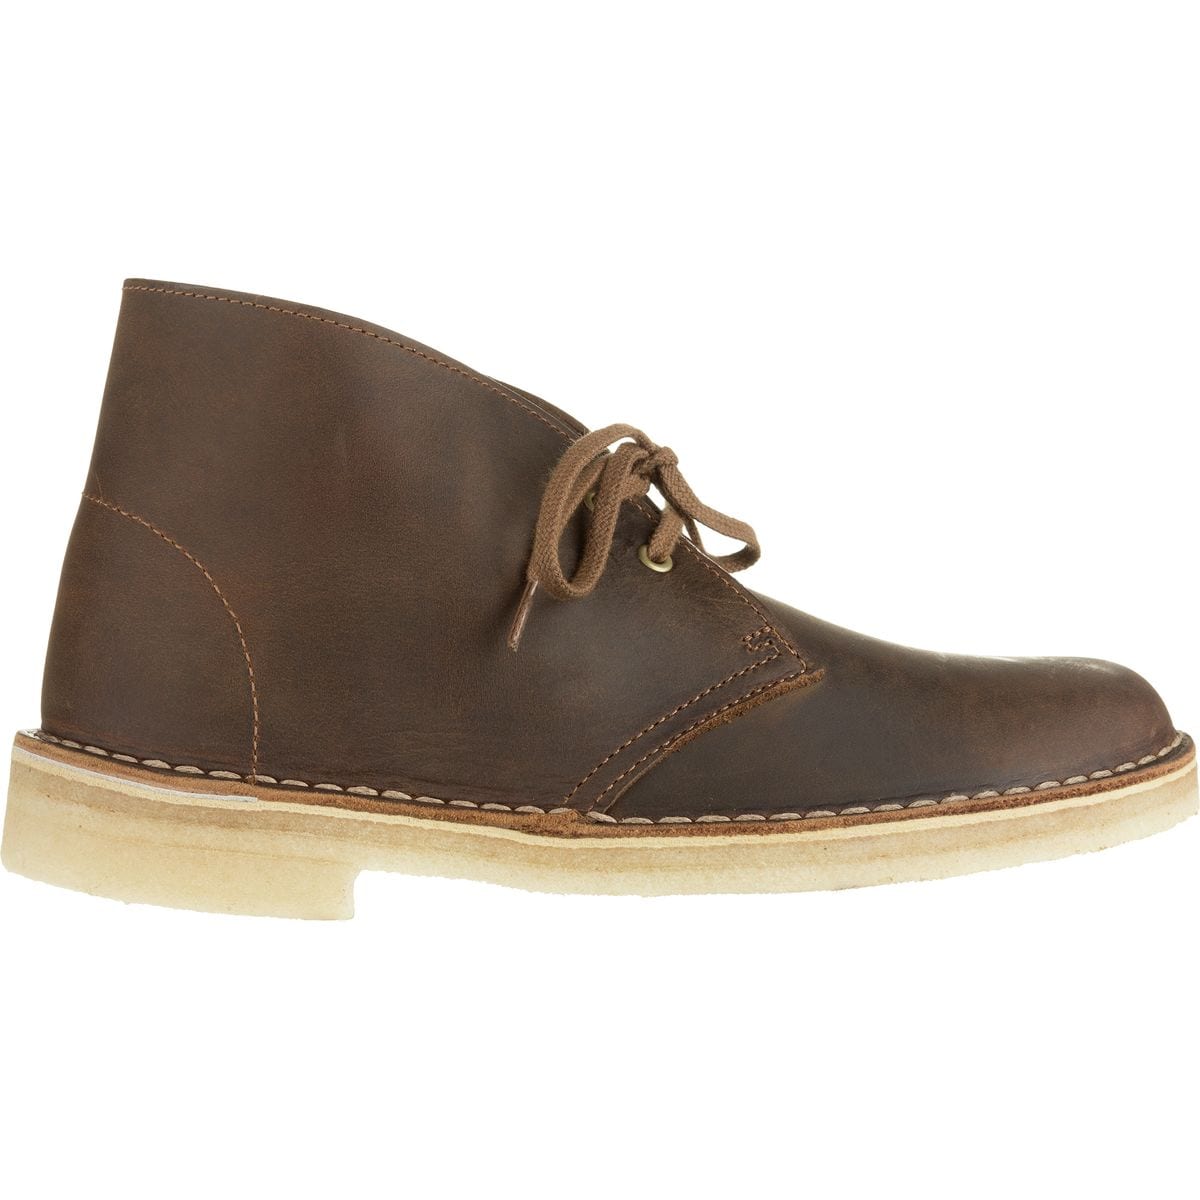 Clarks England Shoes Desert Boot Women Beeswax Leather Comfort 26111499 ...